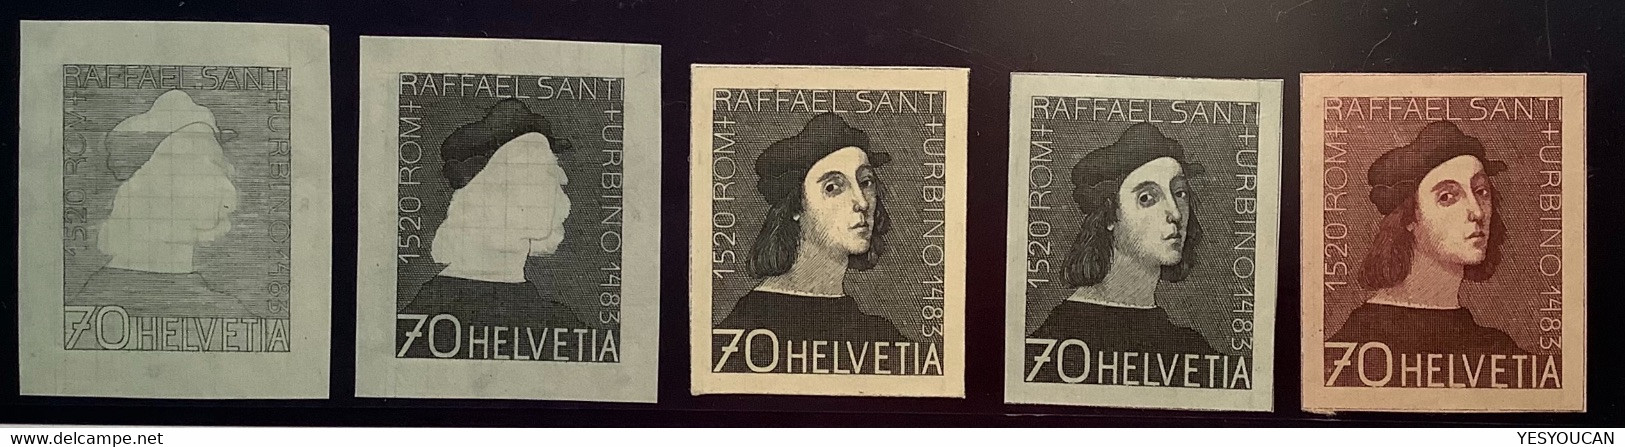 Schweiz1946 BICKEL ESSAY "RAFFAEL SANTI"1483-1520 Raphael Italian Renaissance Painter&architect(Art Vatican Architecture - Nuevos